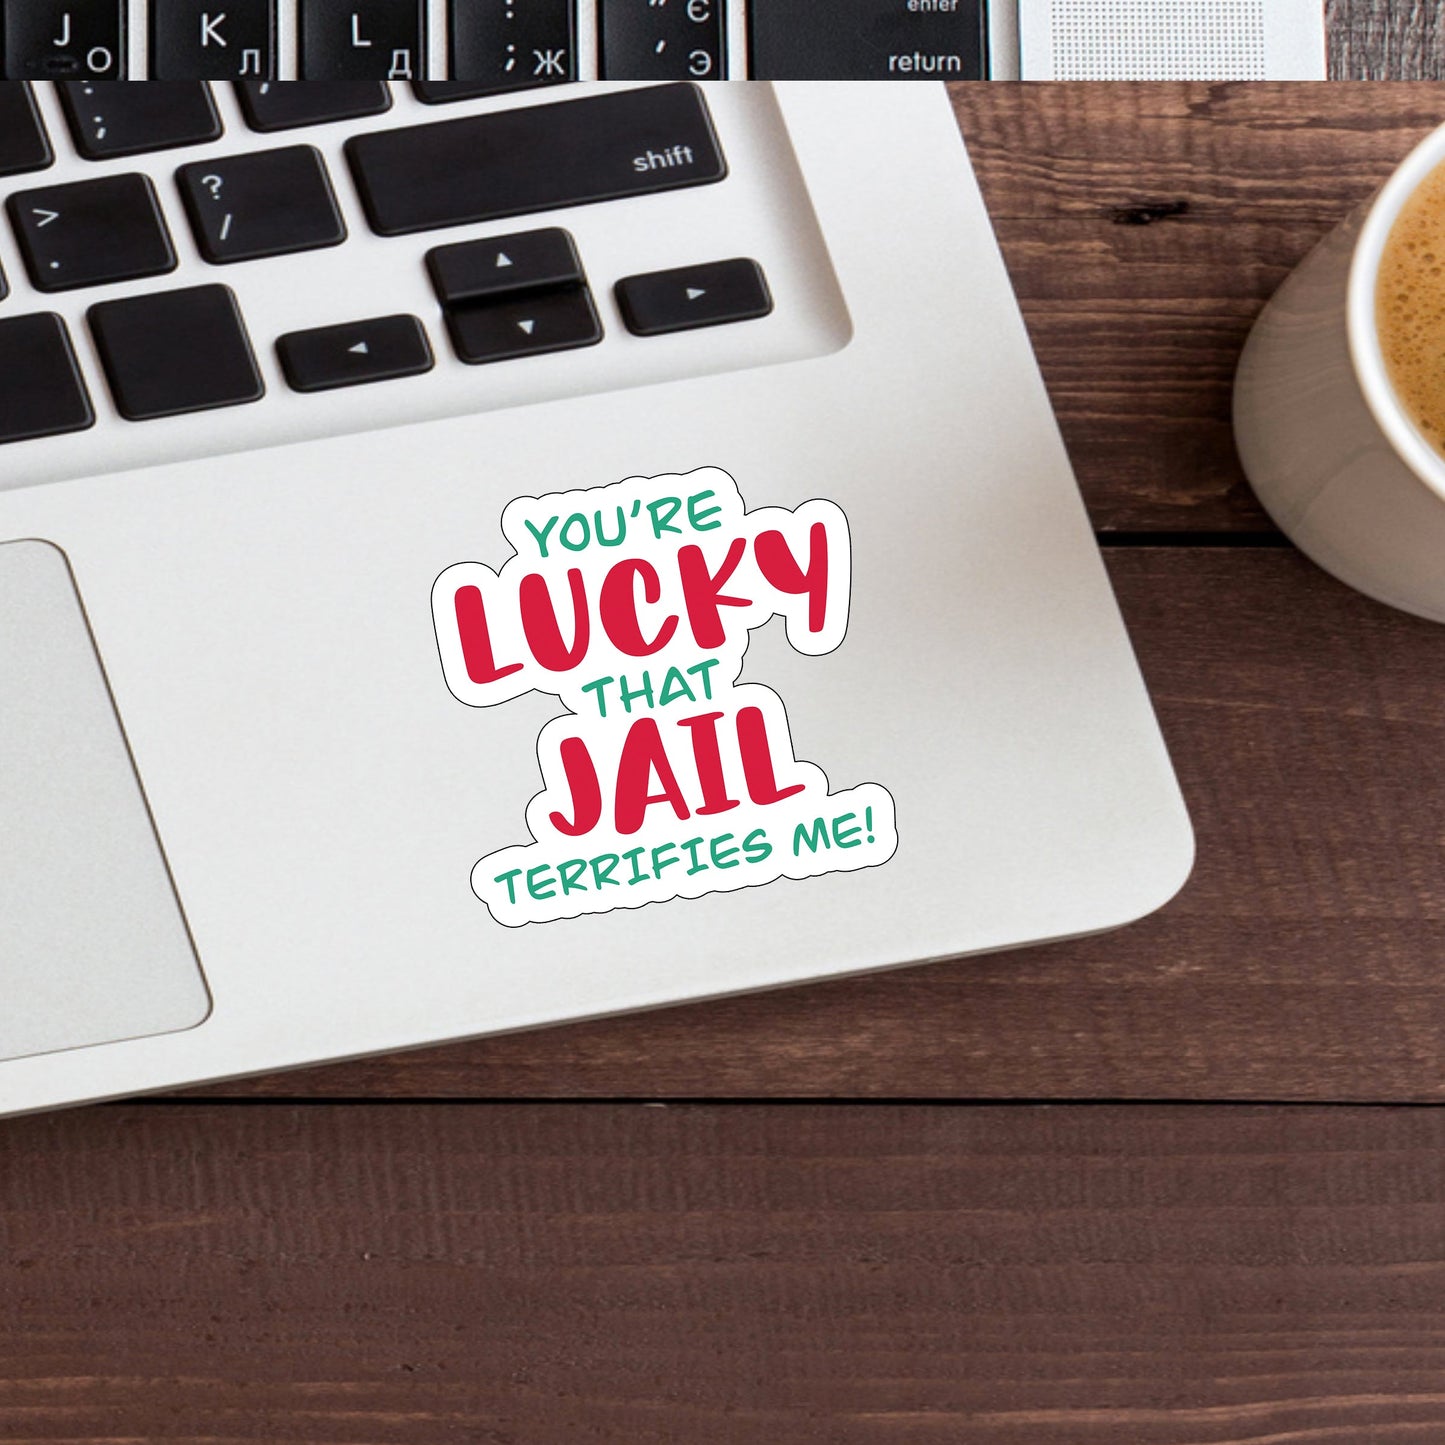 You're lucky that jail terrifies me  Sticker,  Vinyl sticker, laptop sticker, Tablet sticker